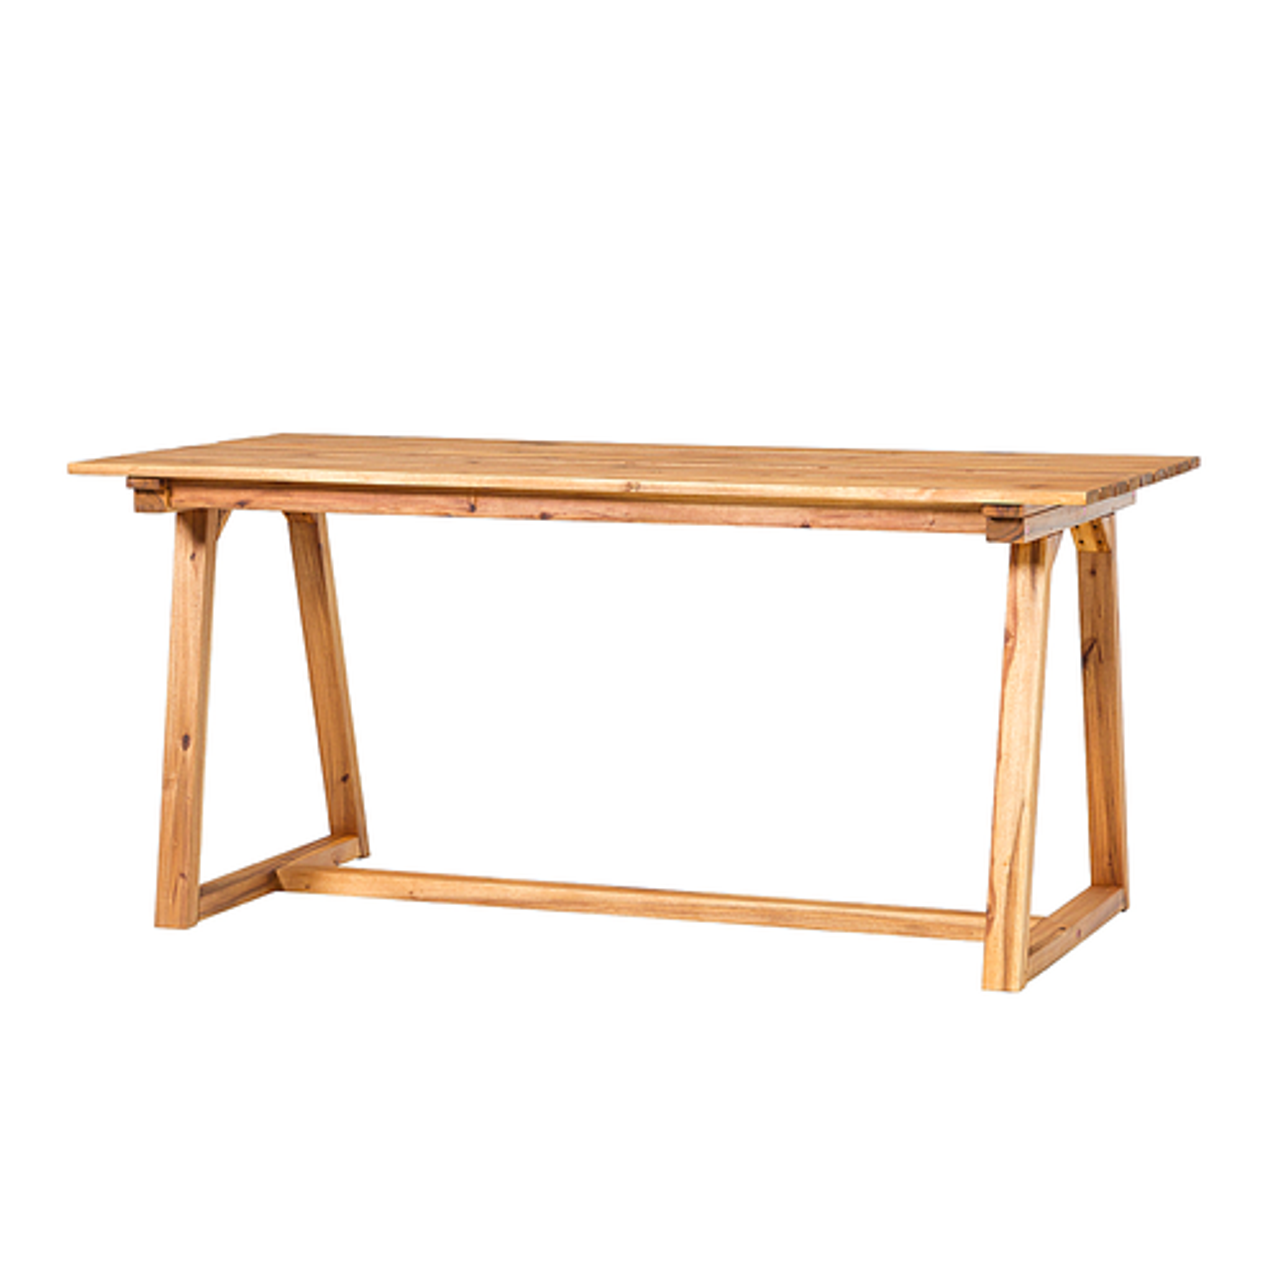 Walker Edison - Modern Solid Wood Slatted Outdoor Dining Table - Natural